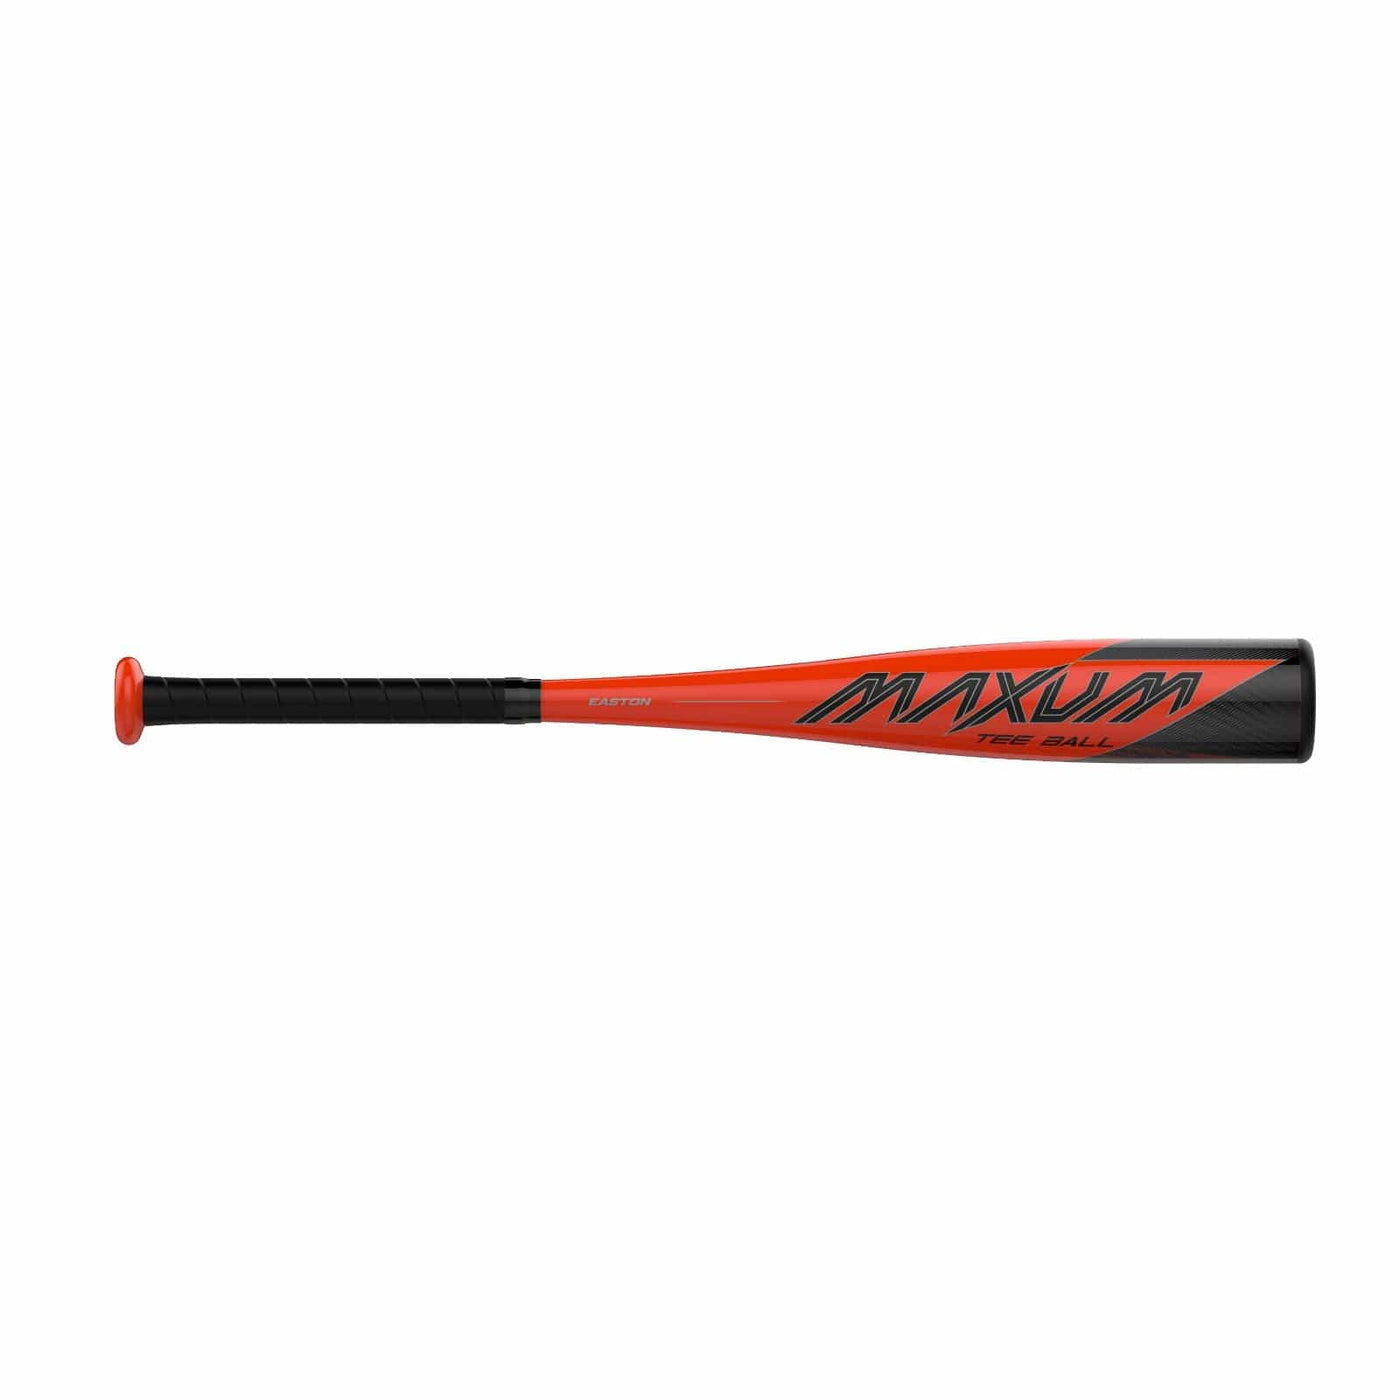 Easton Easton Maxum Tee Ball Baseball Bat -11 26in/15oz Sports